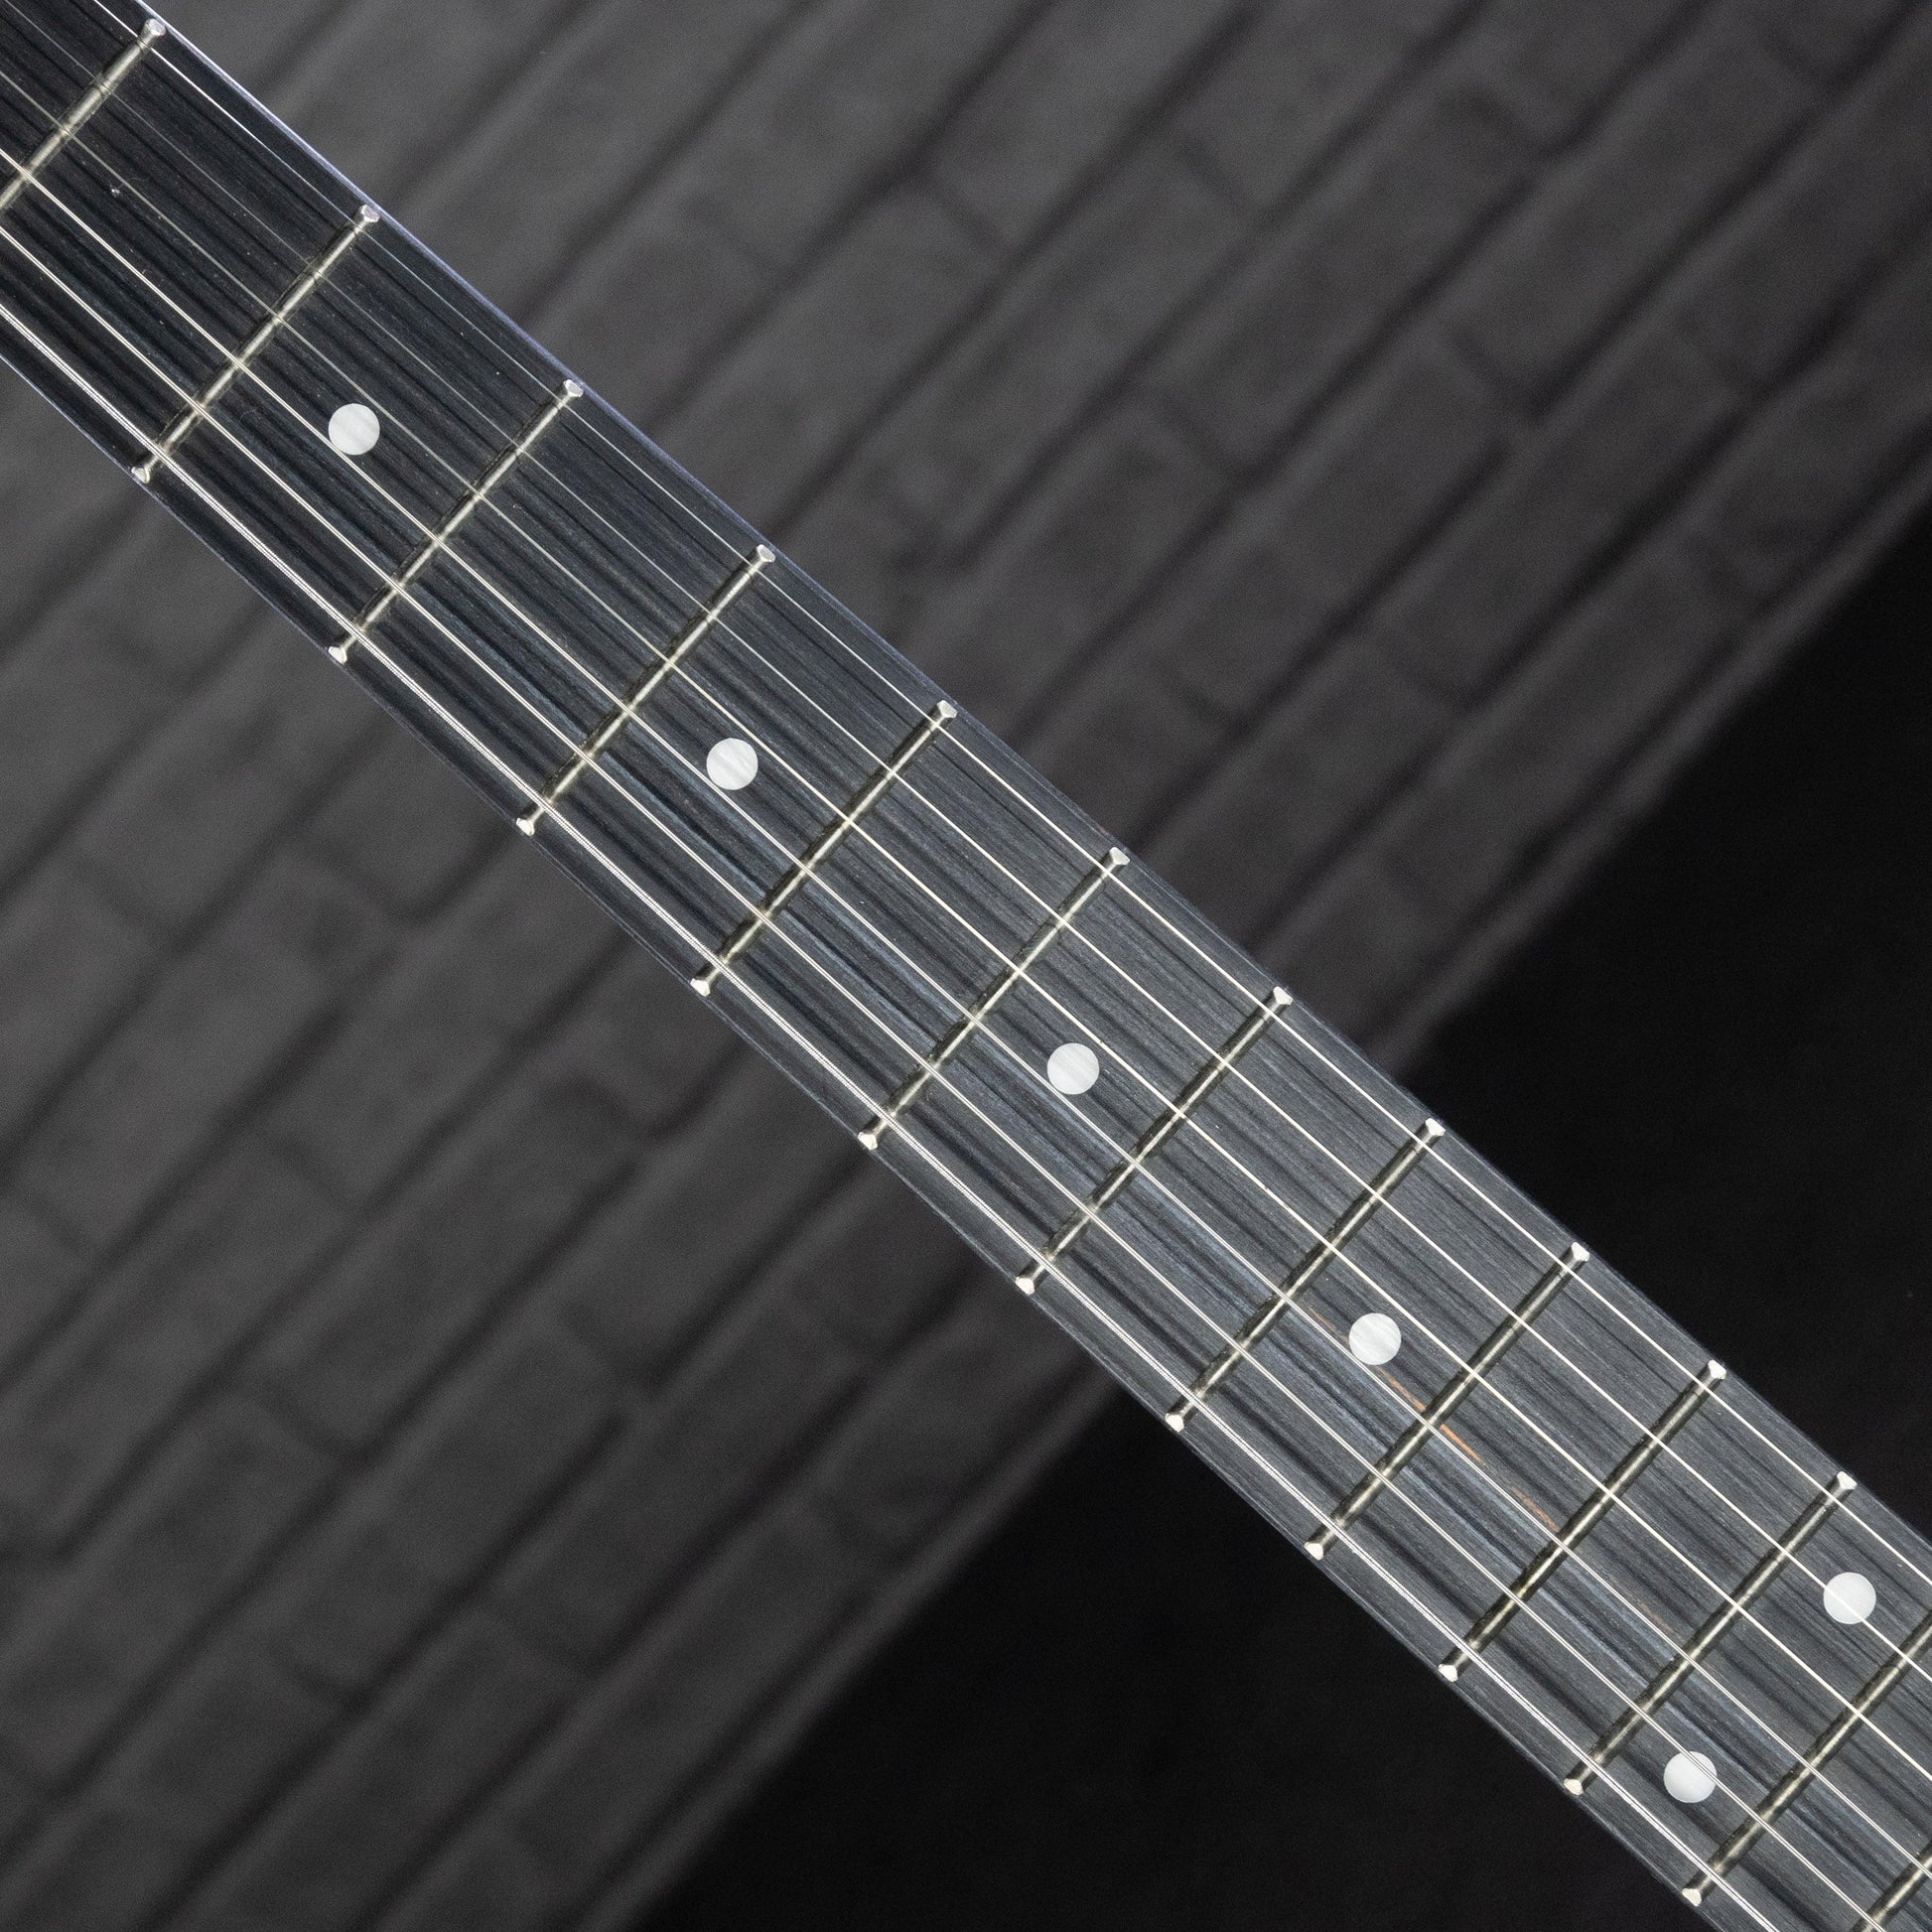 Tagima TG-500 Electric Guitar (Black) - Impulse Music Co.